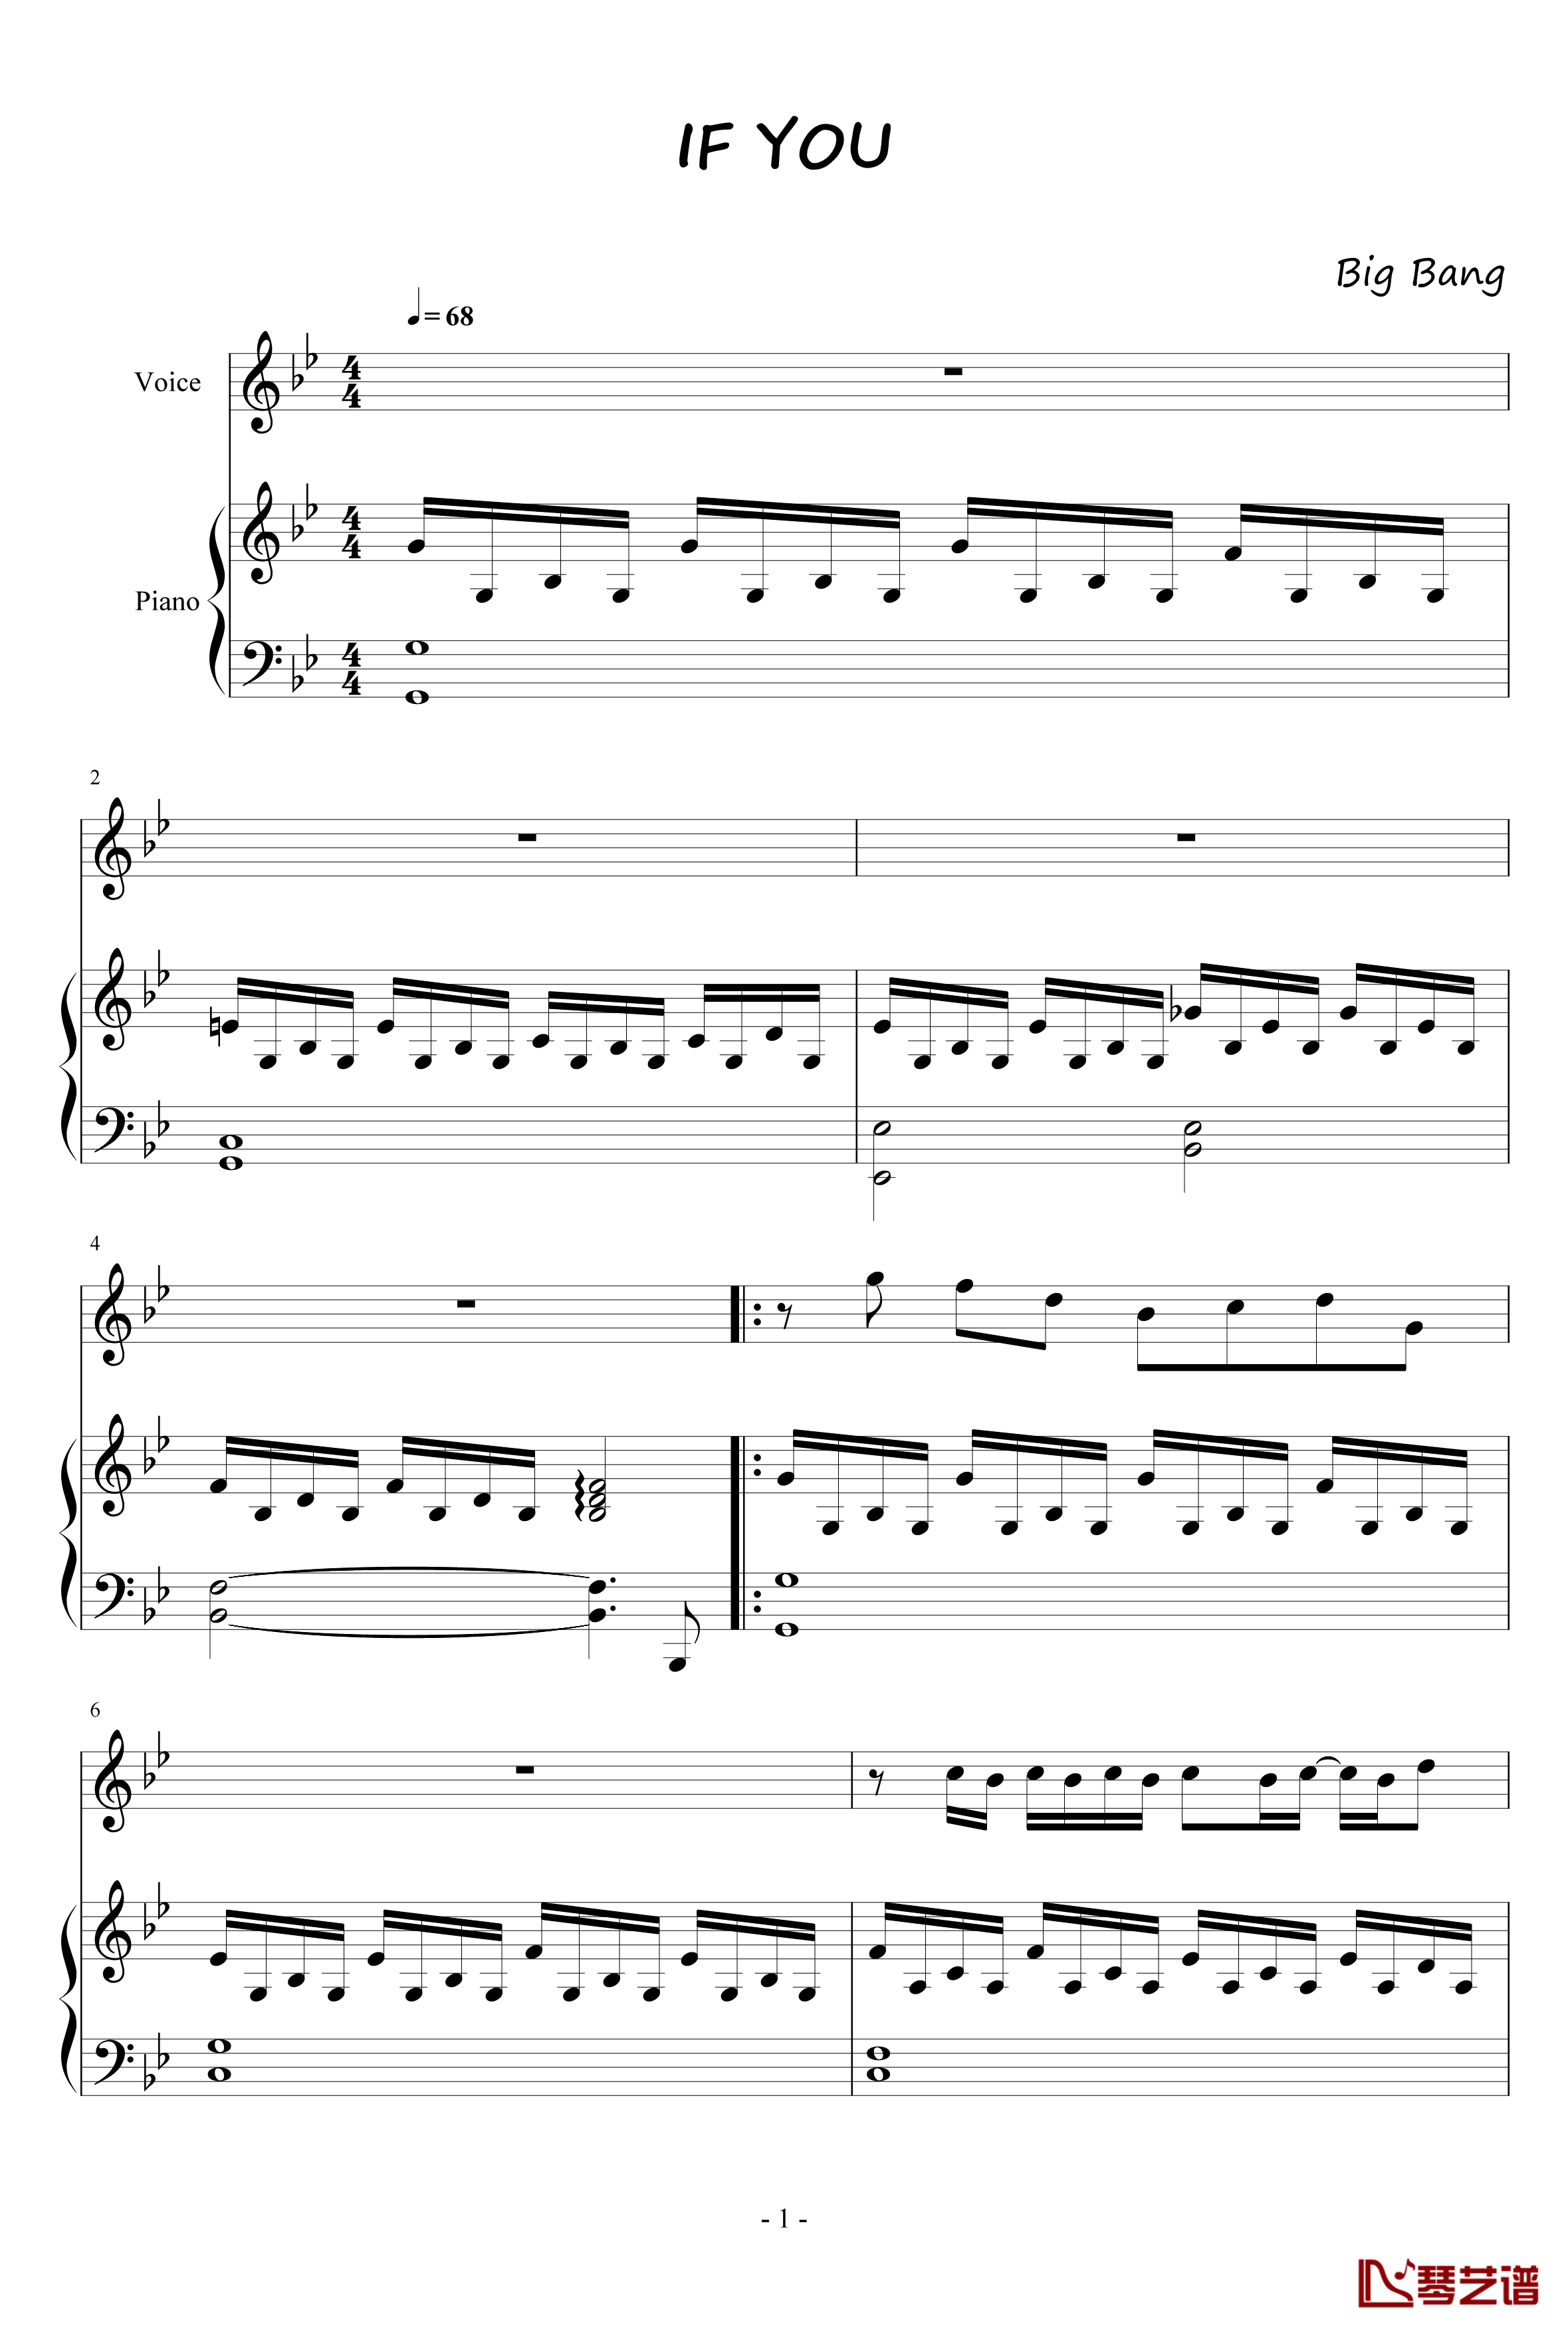 IF YOU钢琴谱男声版-BigBang-低碳伴奏1